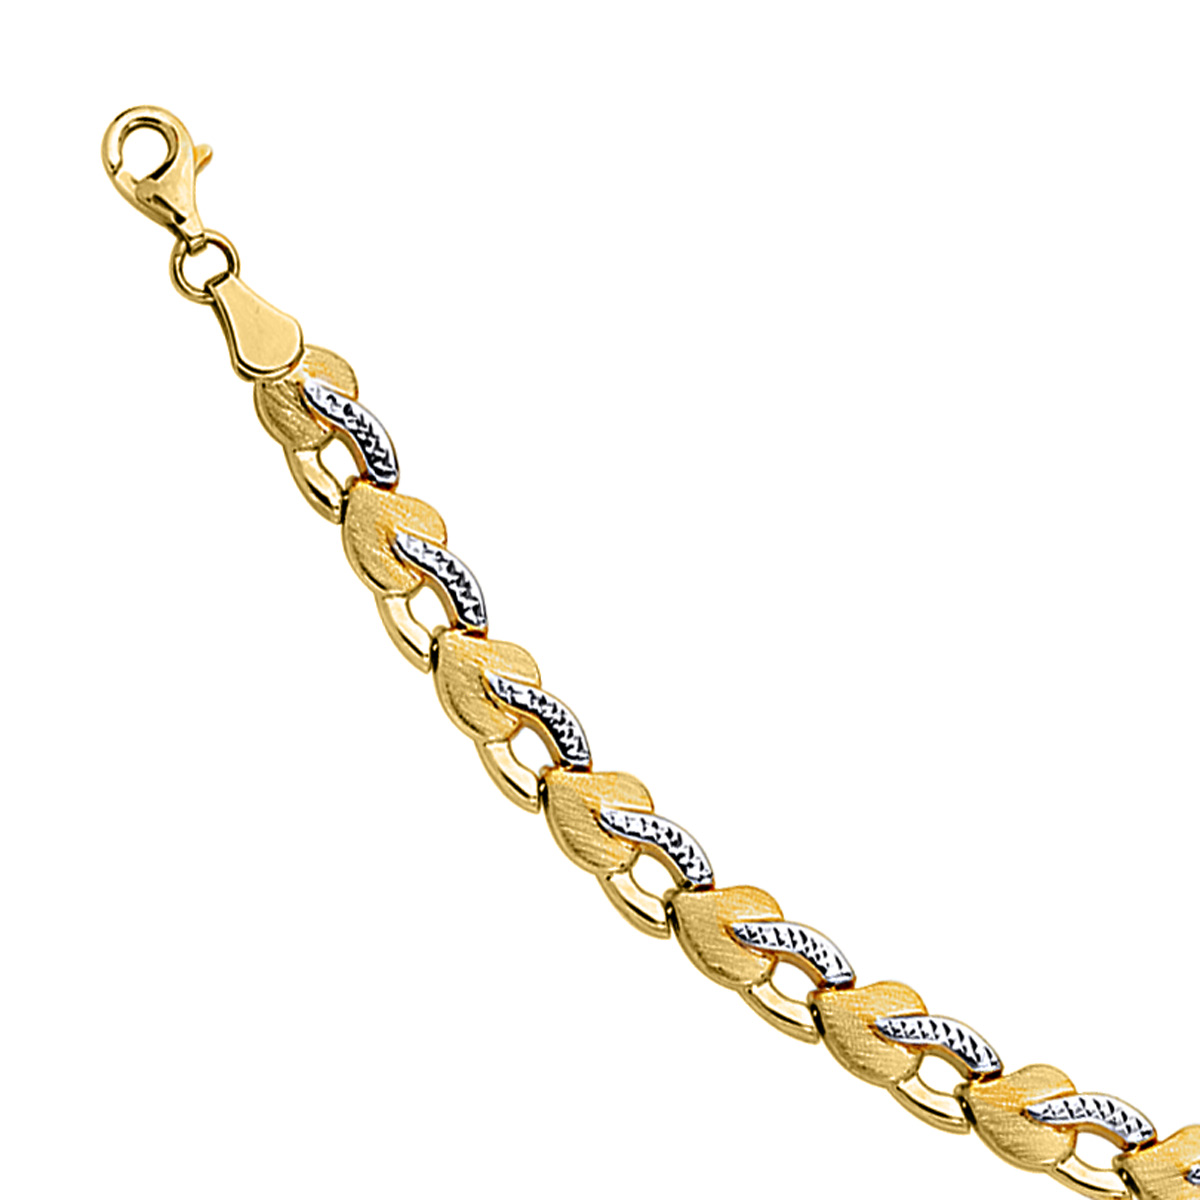 Buy Memoir Gold plated Heart shaped linked sober Stylish fashion bracelet  Women Girls Latest at Amazonin